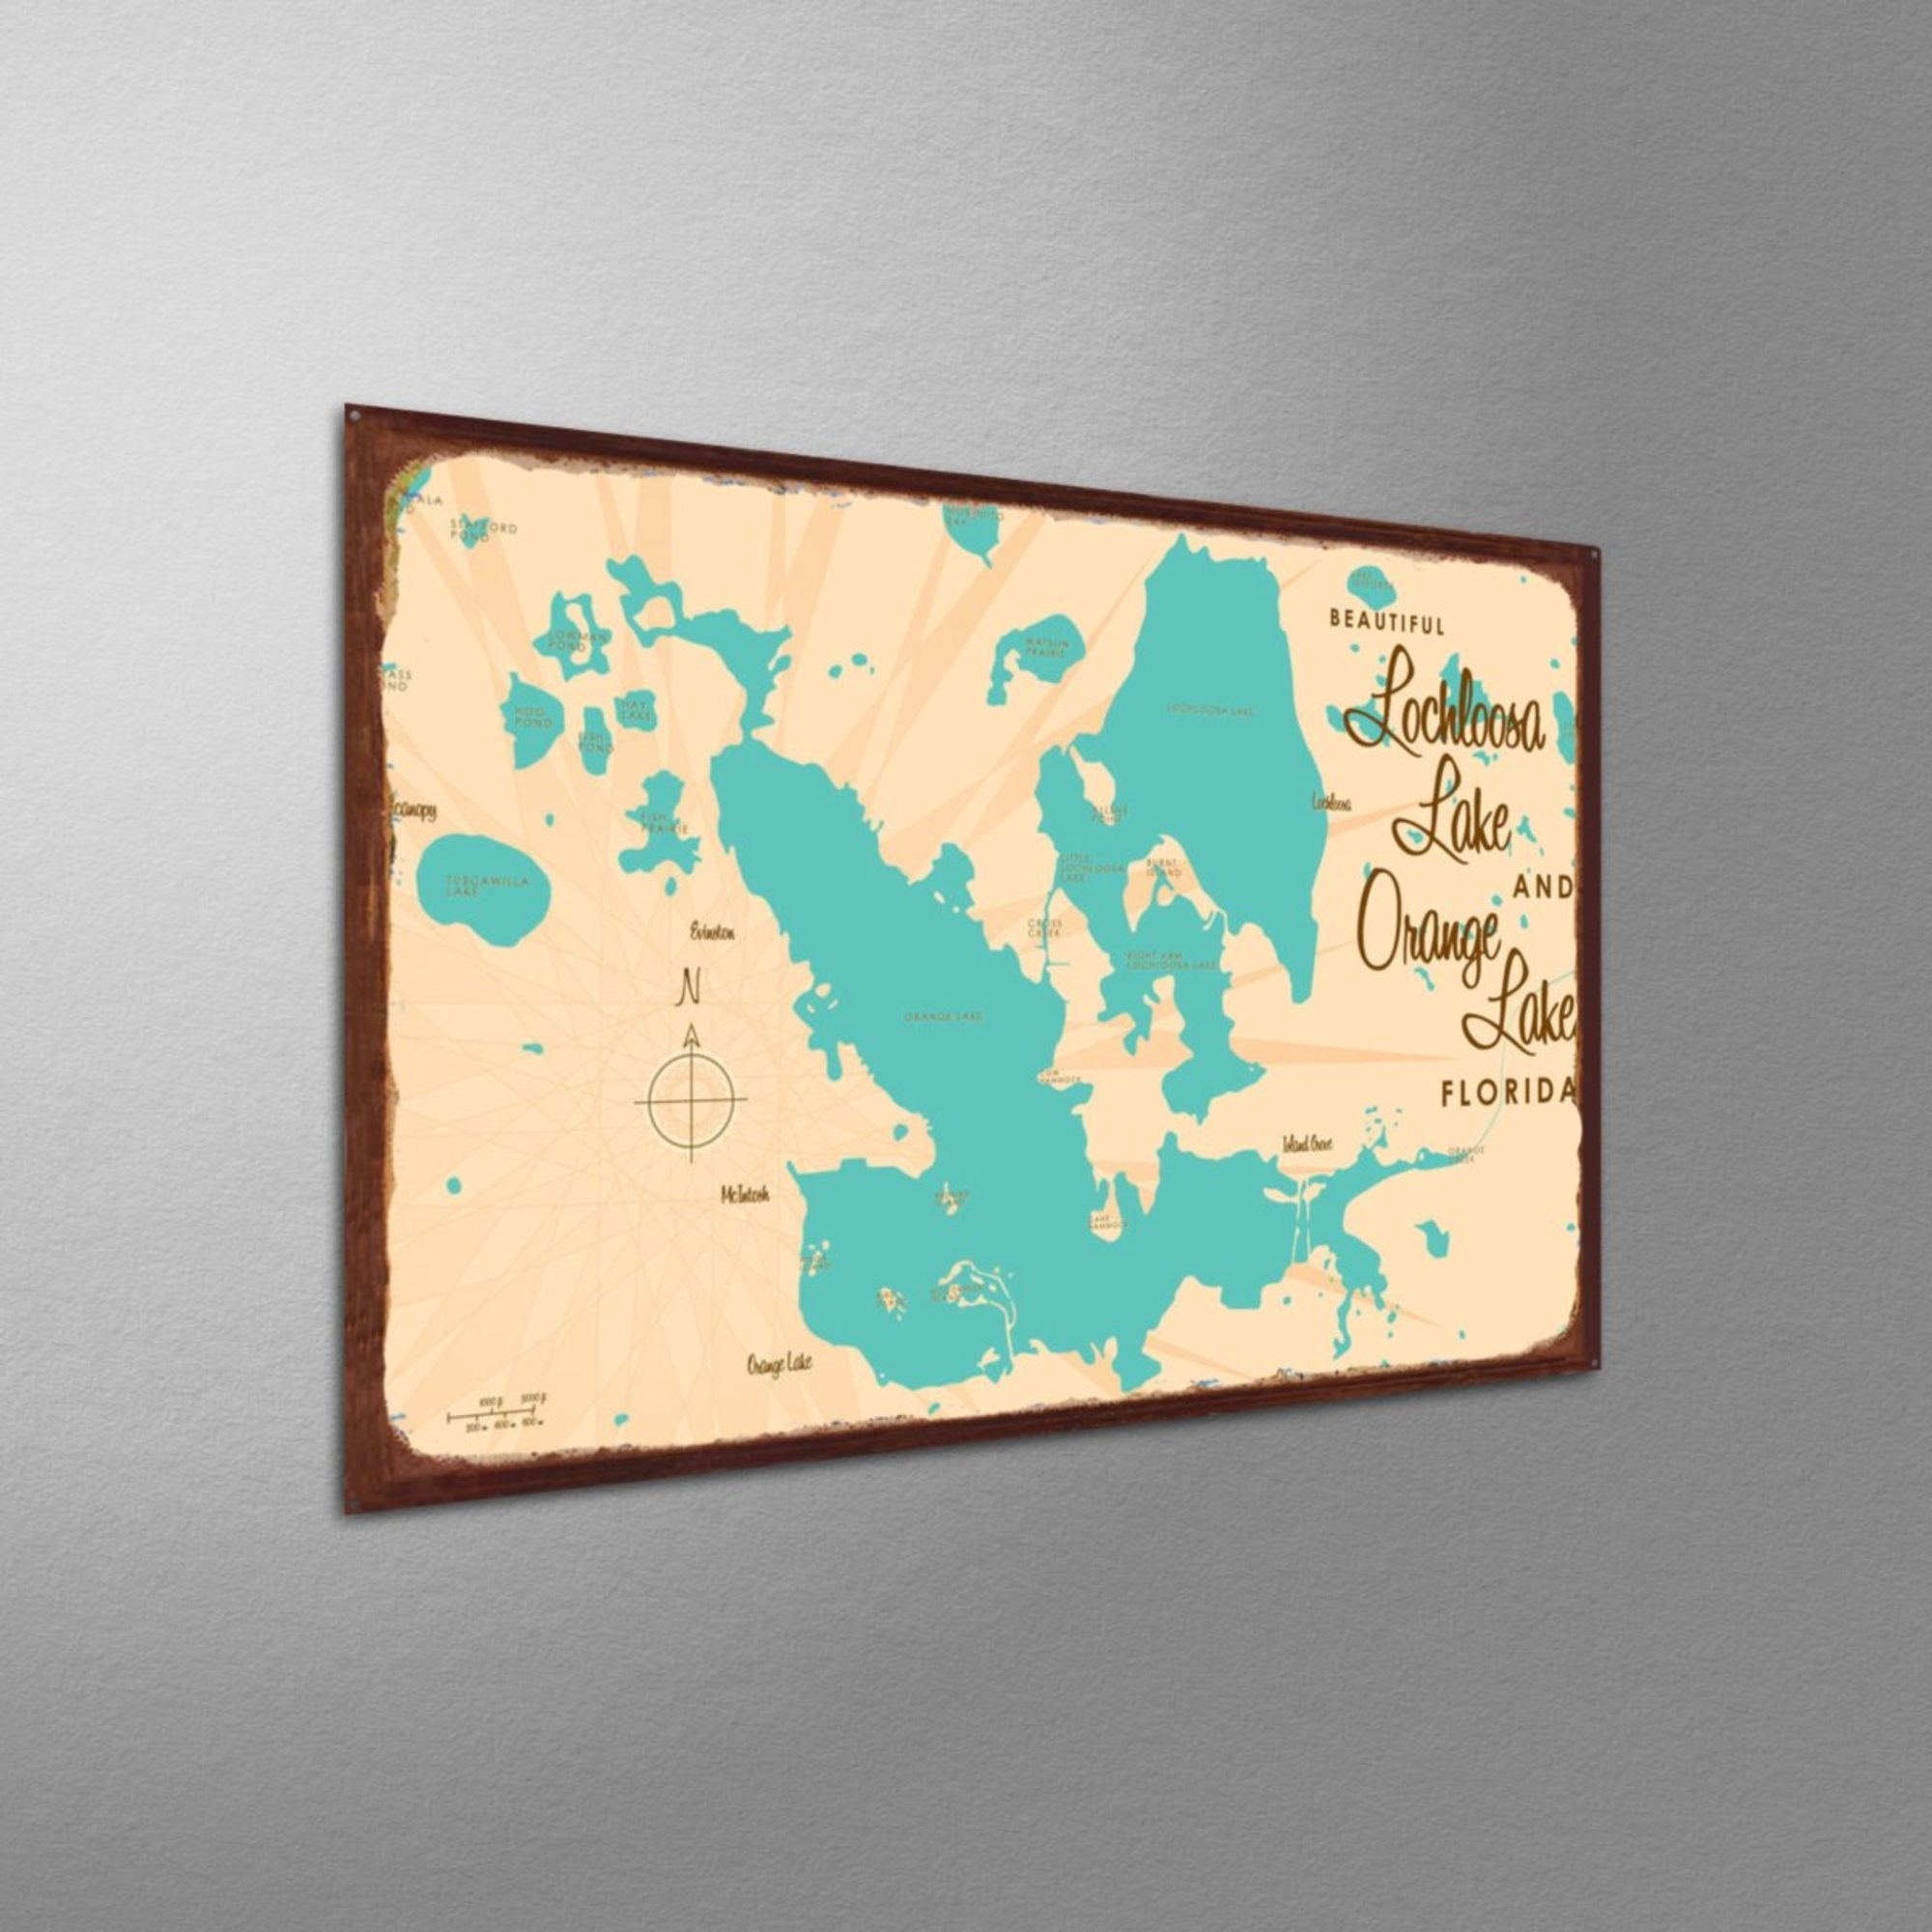 Lochloosa & Orange Lakes Florida, Rustic Metal Sign Map Art